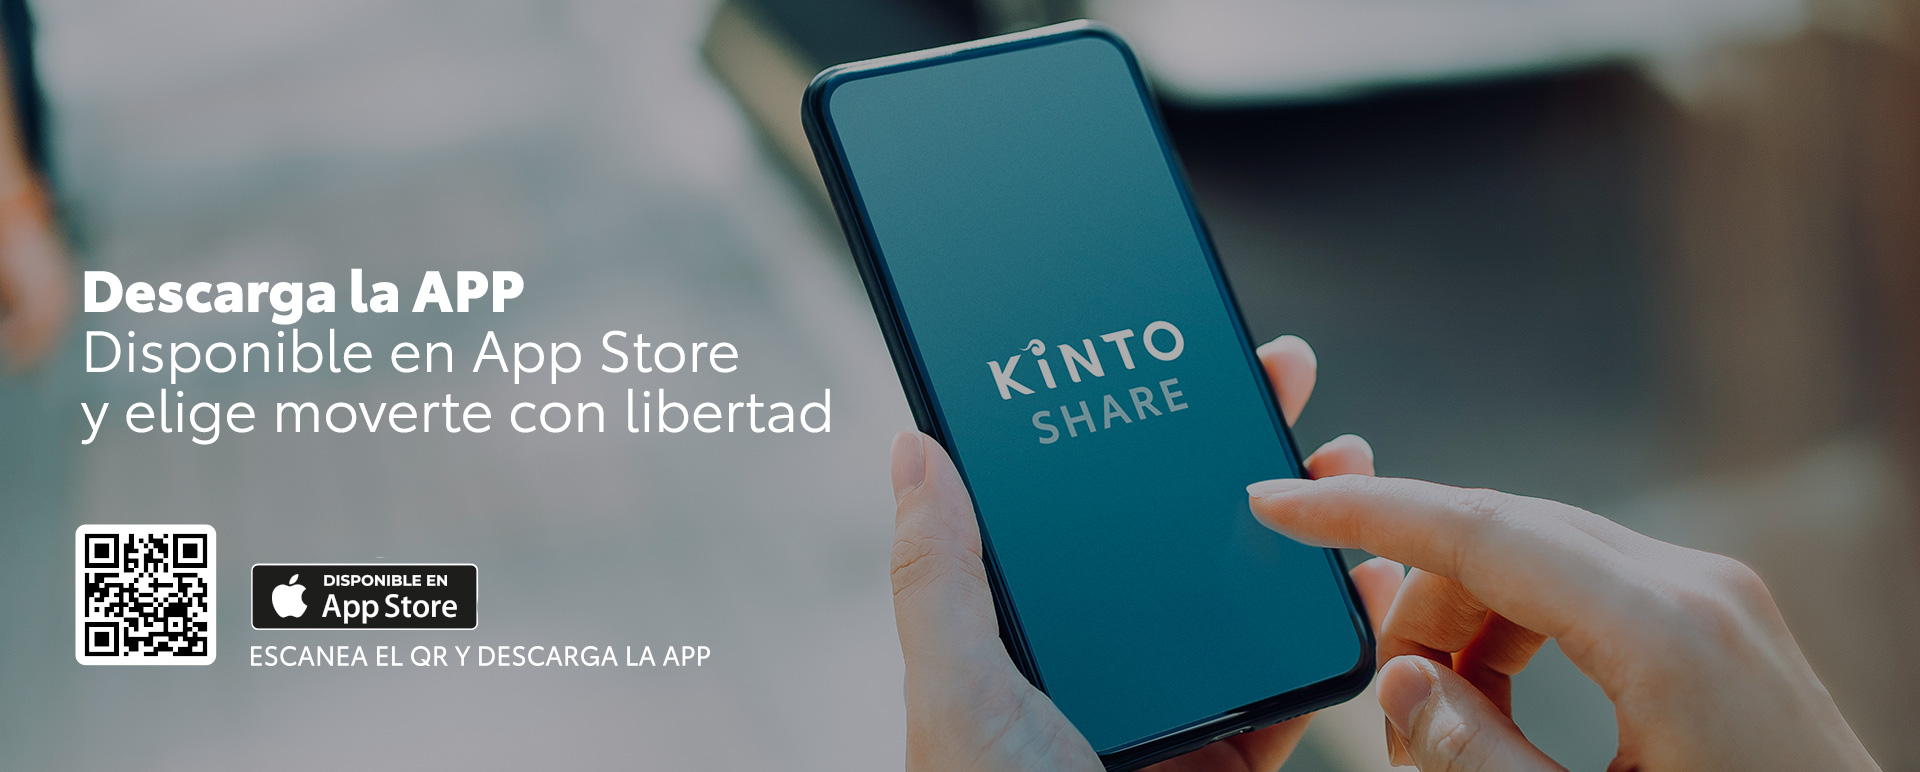 Kinto Share - APP Store